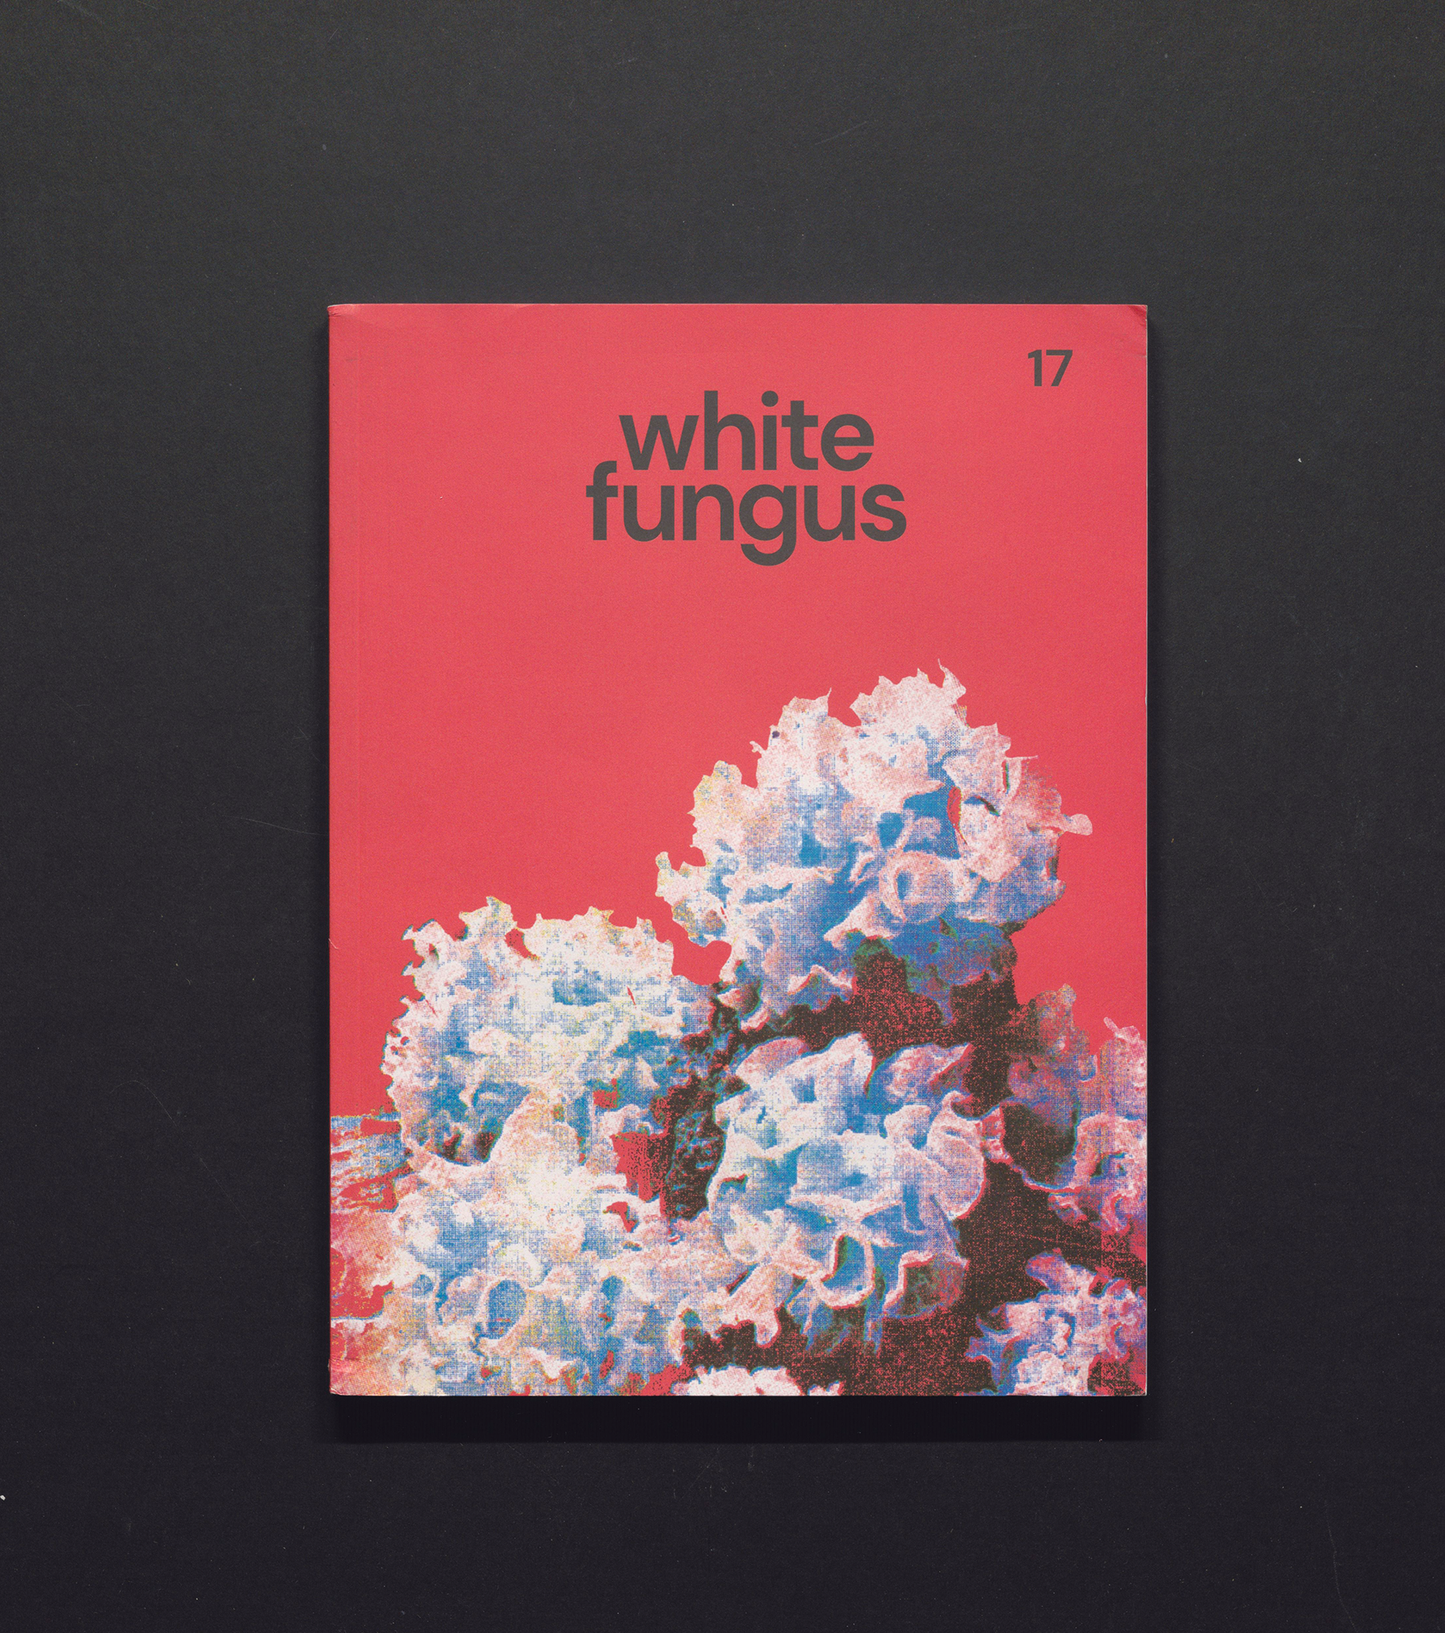 White Fungus - #17